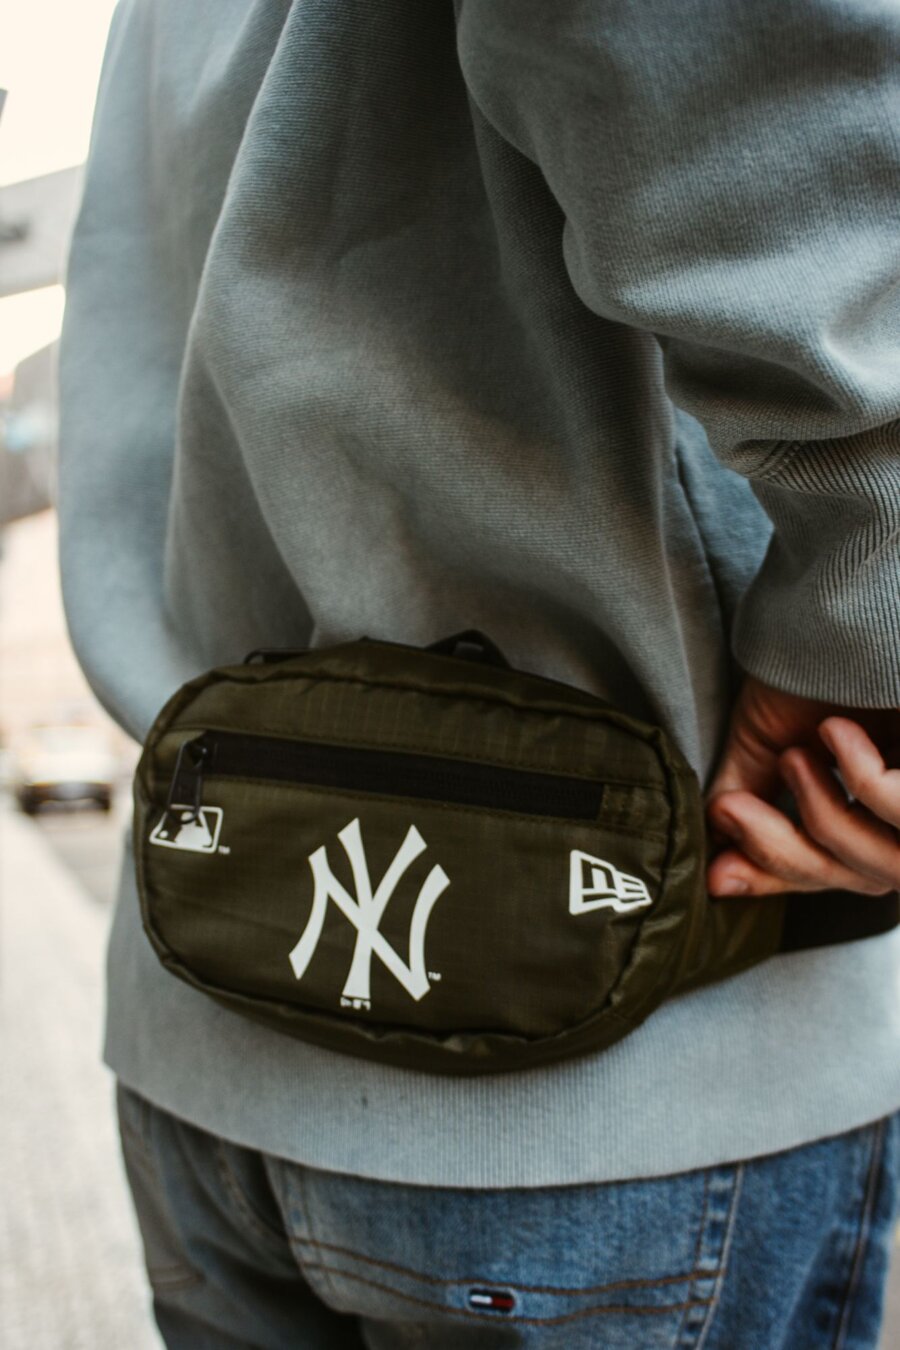 New Era - MLB Micro Waist Bag New York Yankees - Black